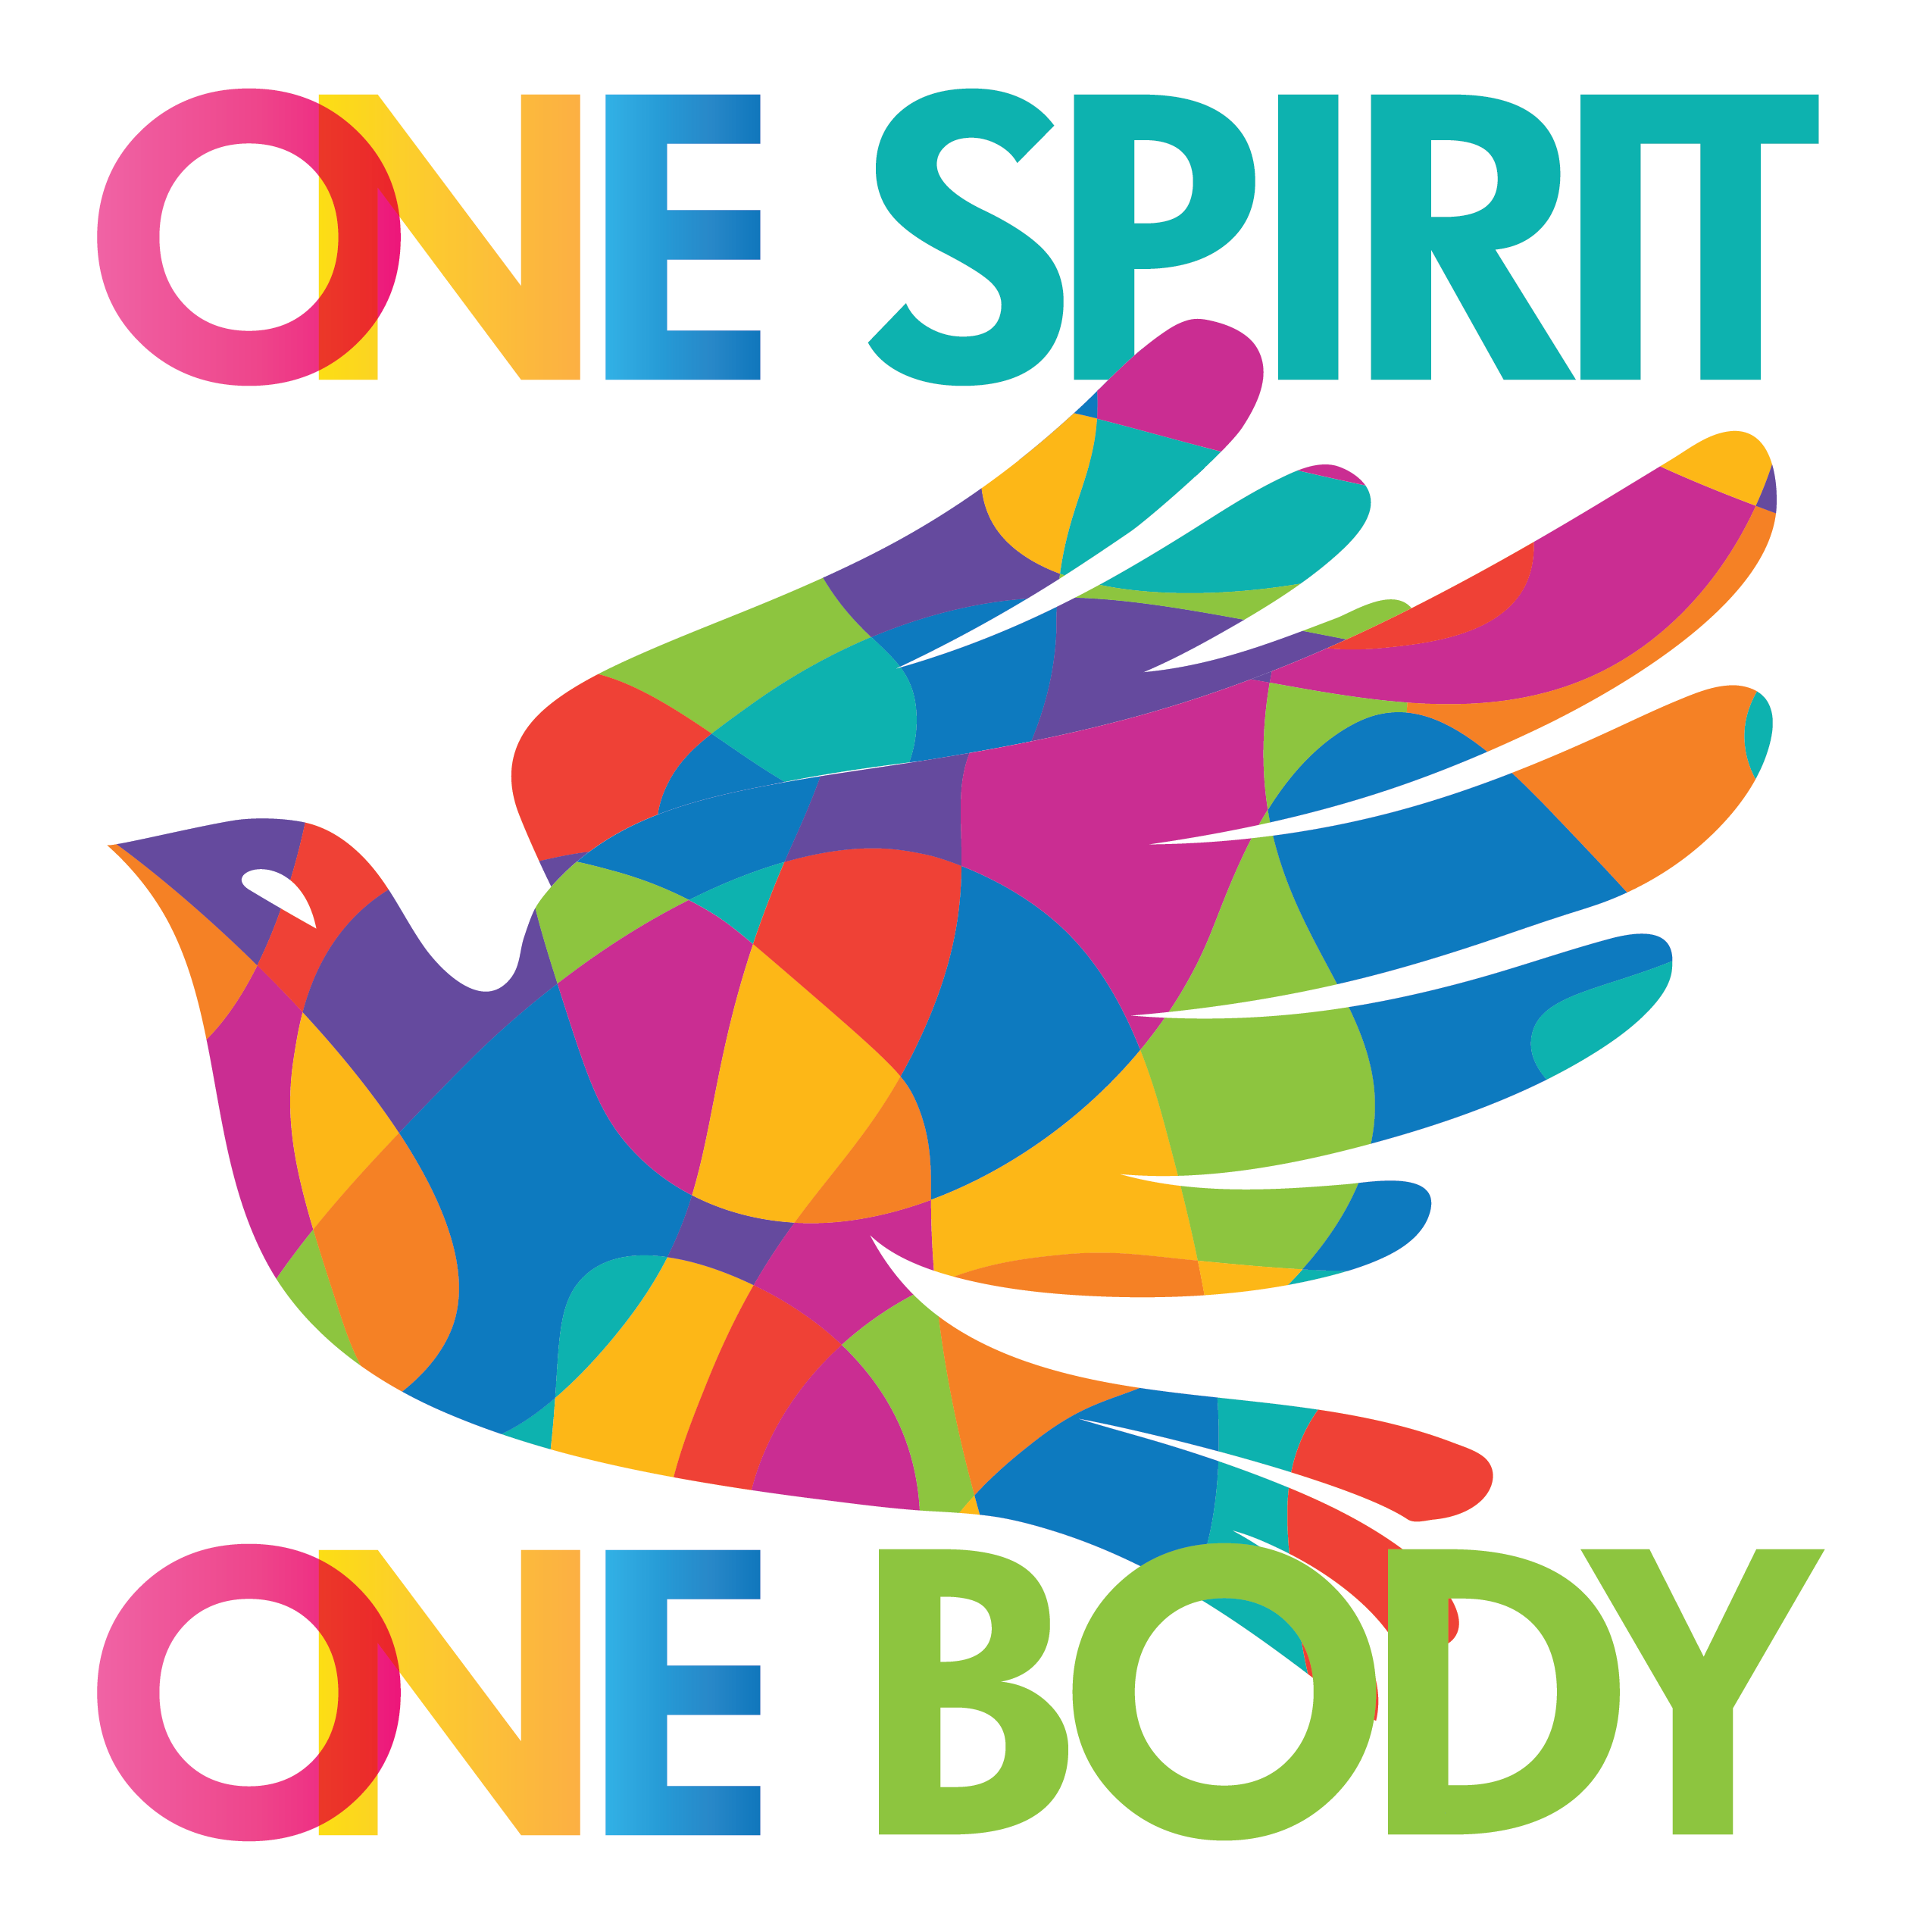 One Spirit One Body Bible Study - How Ralph West met Steve Wells